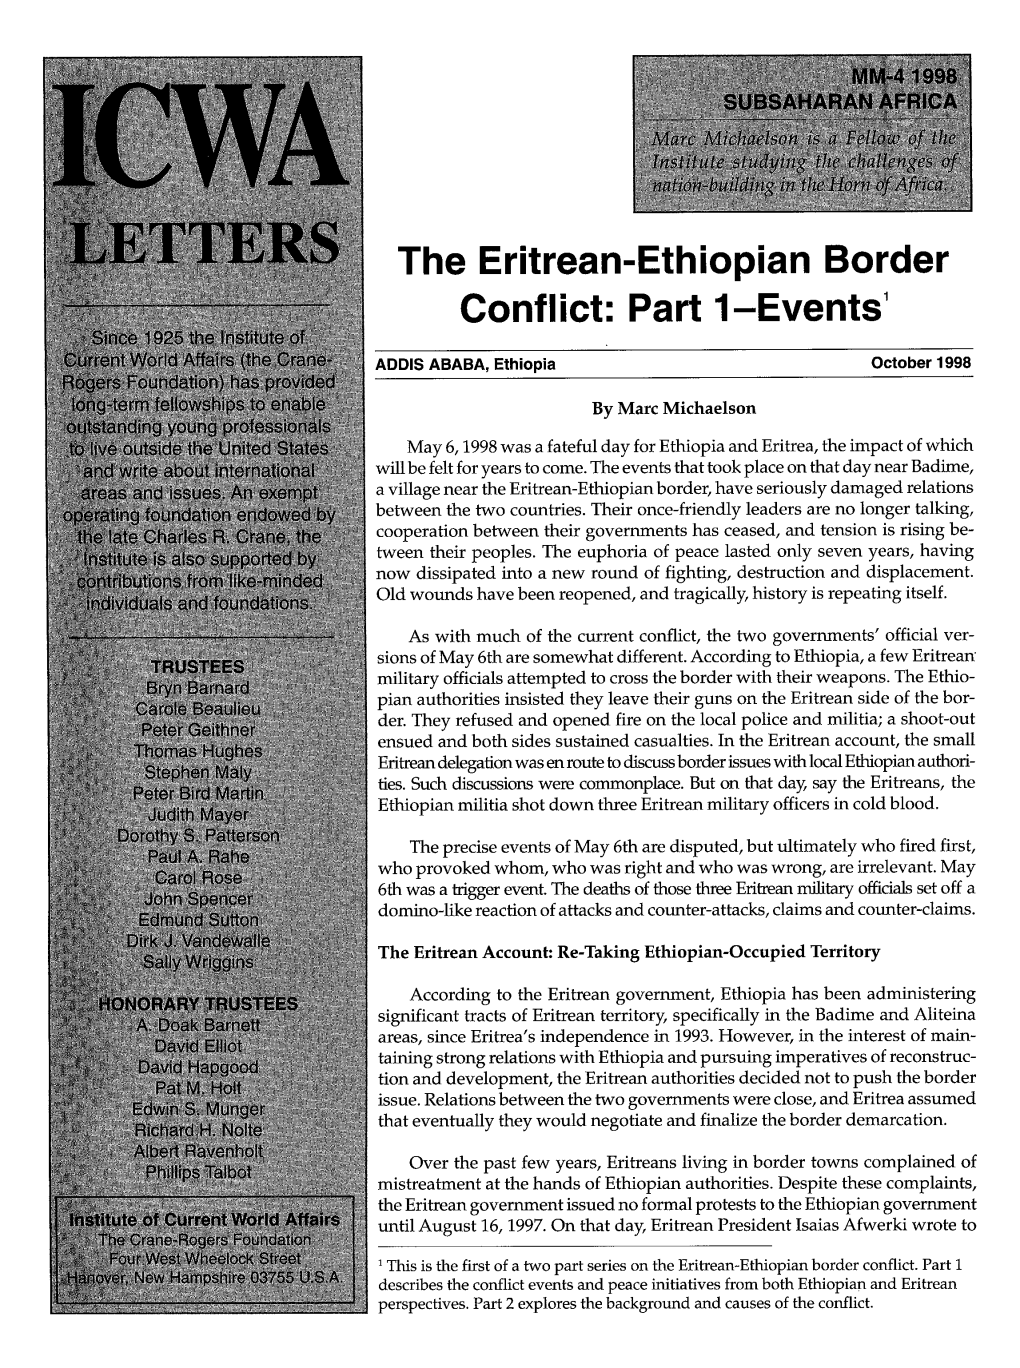 The Eritrean-Ethiopian Border Conflict" Part 1-Events